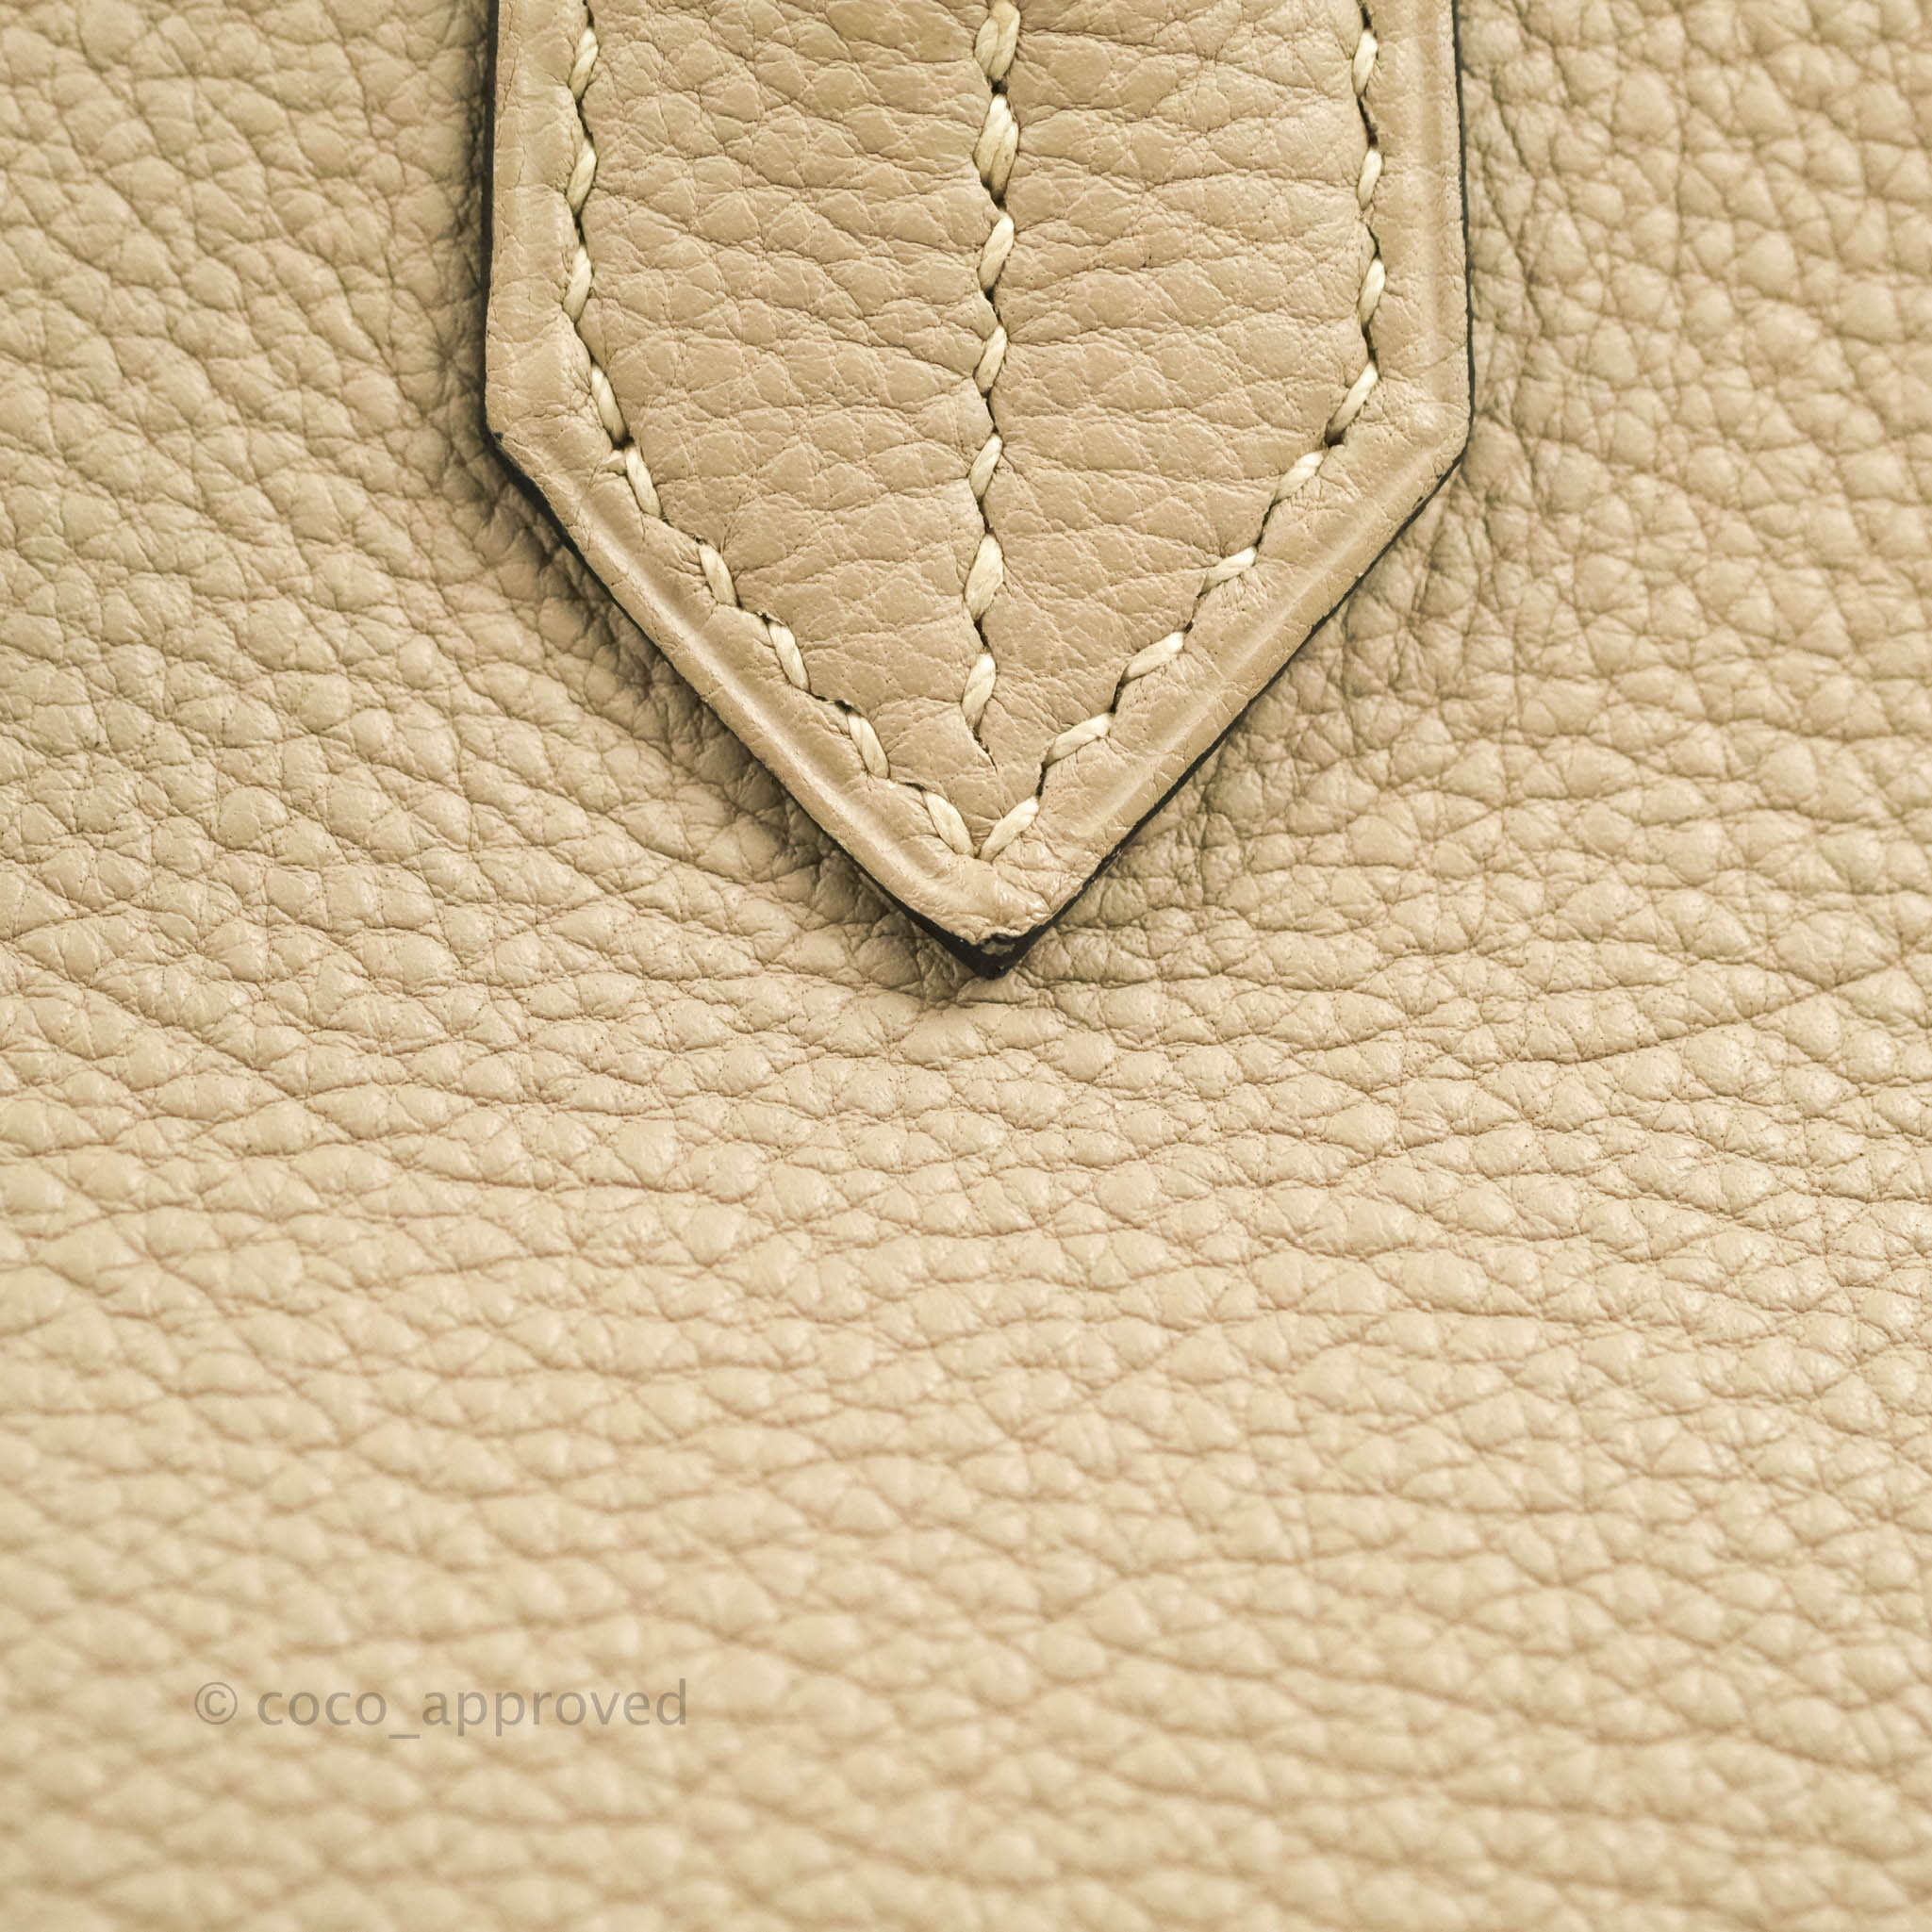 Hermes Birkin Bag 35CM Togo Leather/Toile H Canvas Palladium Hardware, CK81  Gris Tourterelle